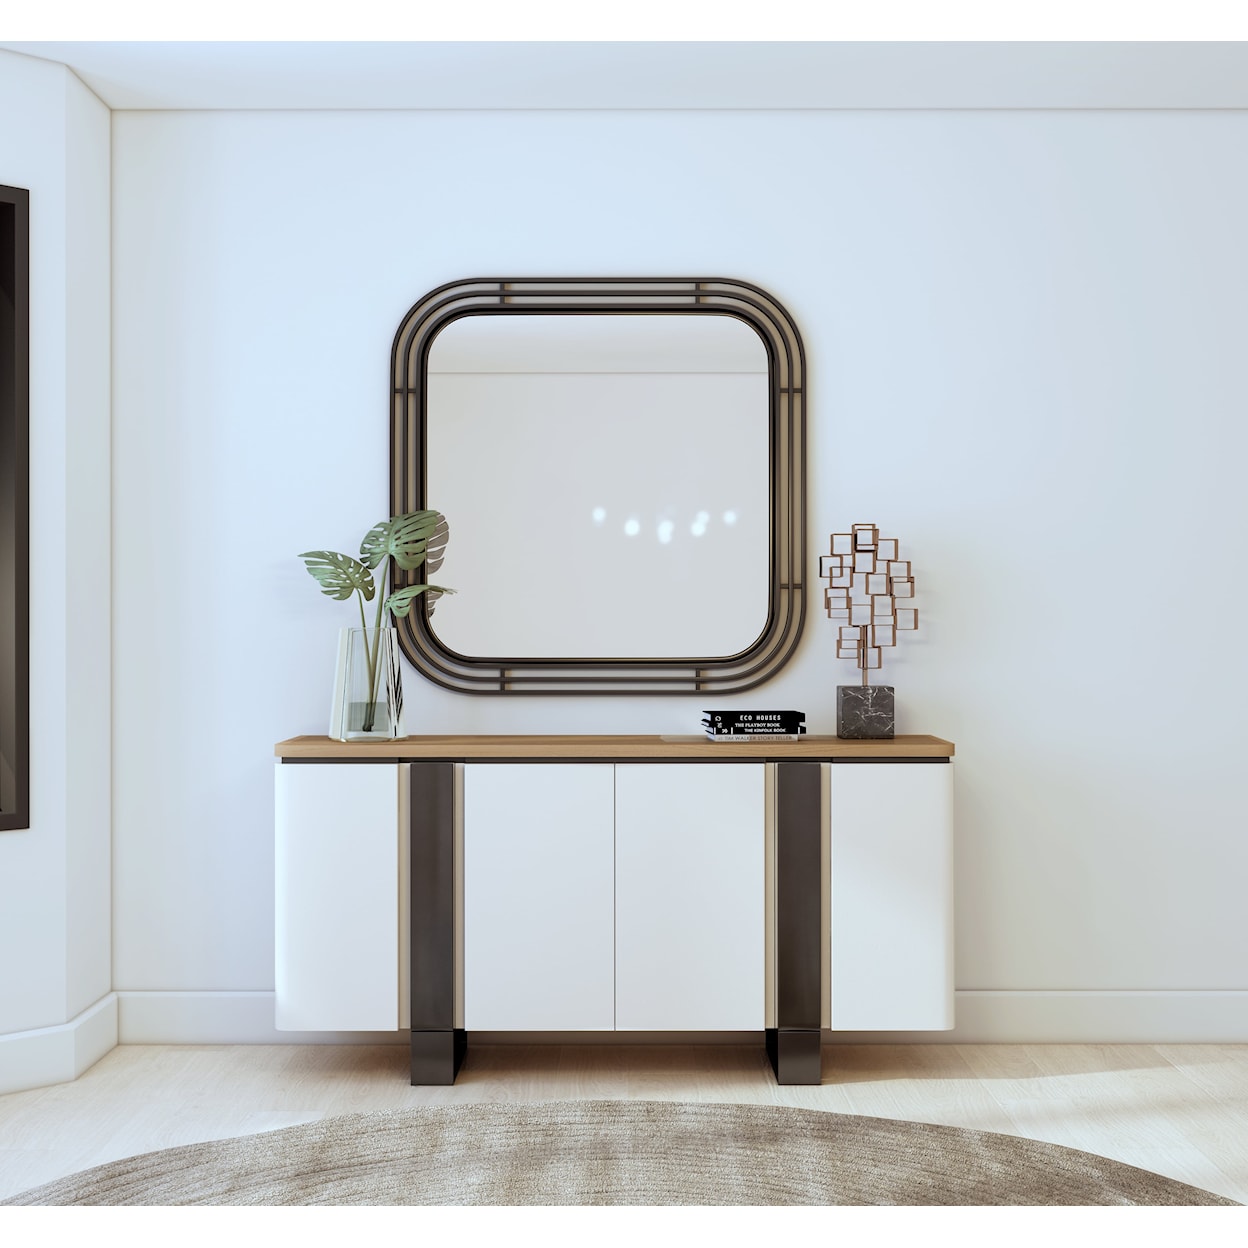 A.R.T. Furniture Inc Portico Wall Mirror